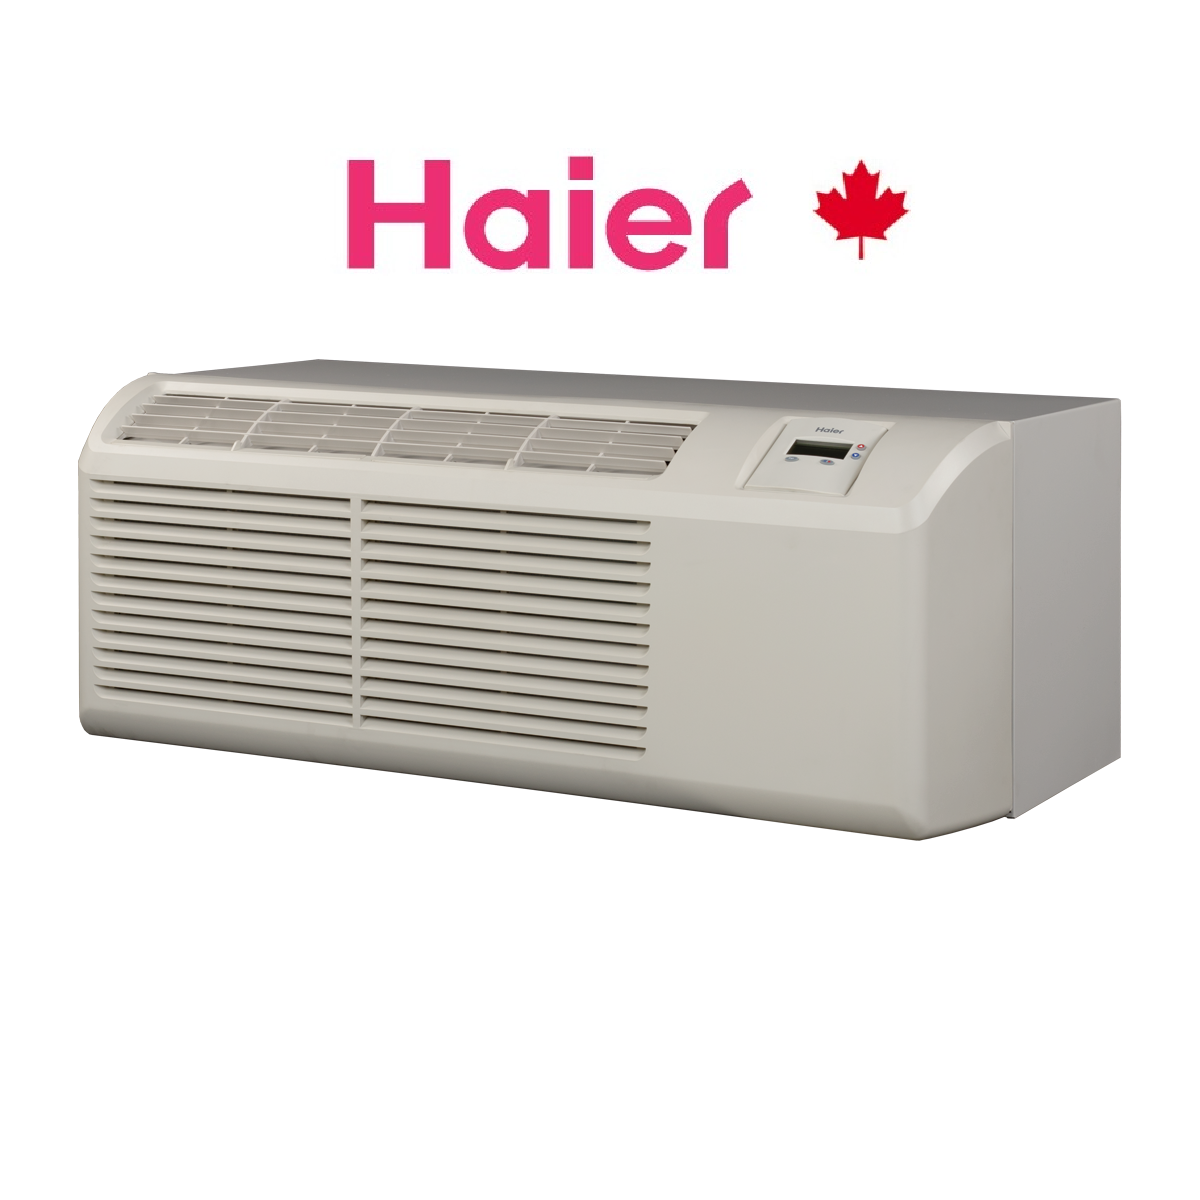 Haier PTCH151UAC 15000 btu PTAC Unit with Electric Heat